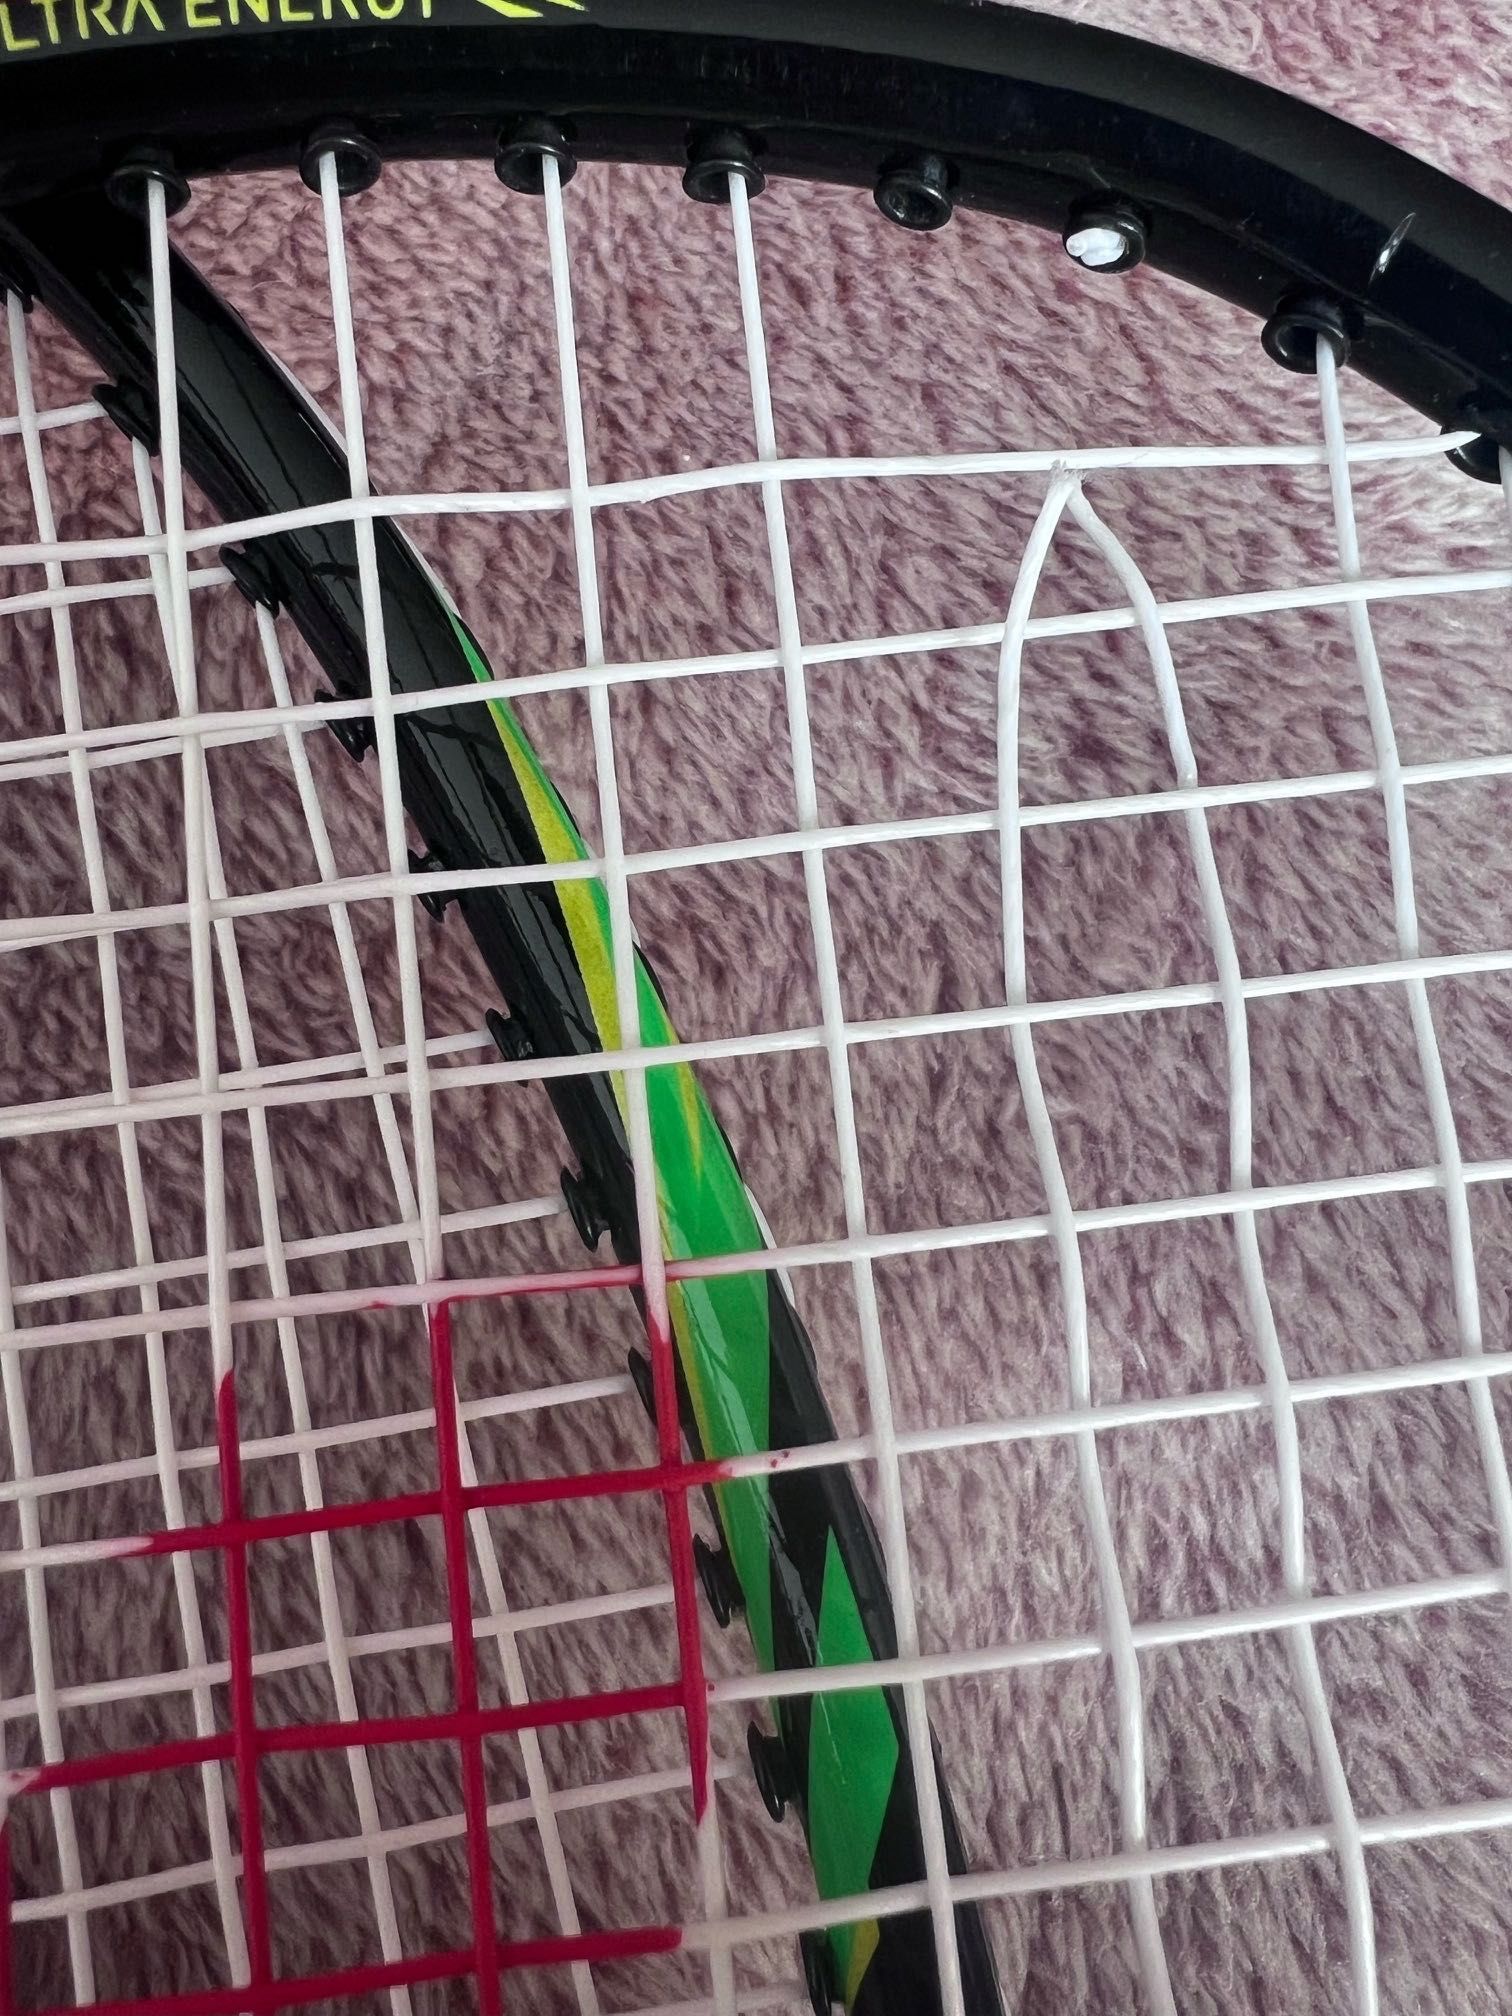 Zestaw rakieta lotka owijka Kawasaki Badminton rakietka OPIS